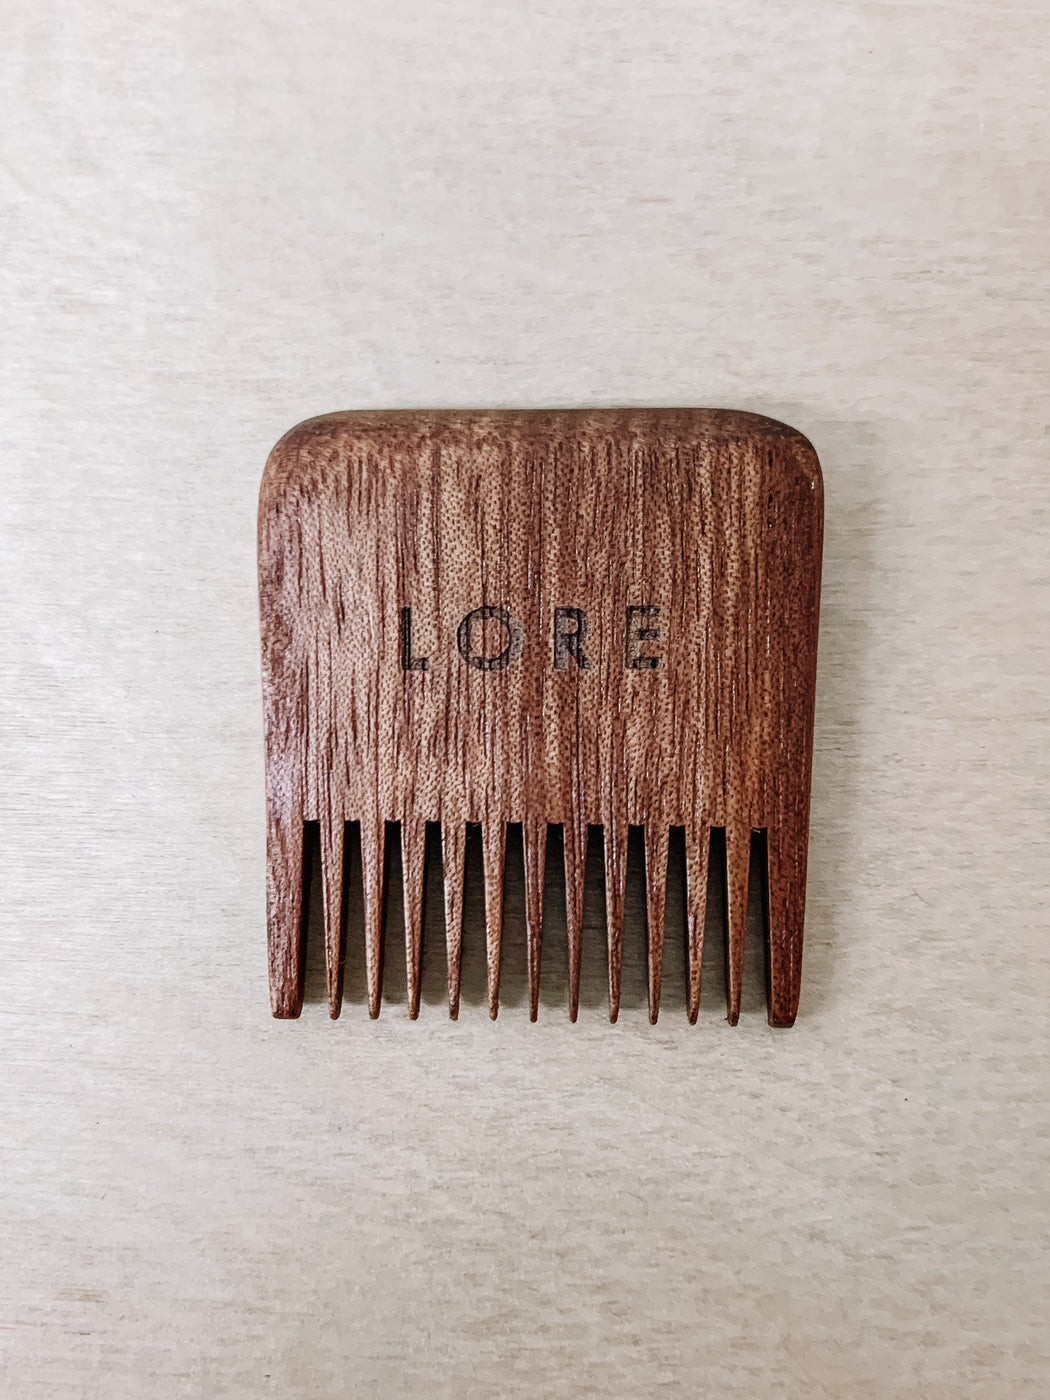 Lore General- Red Wood Beard Comb